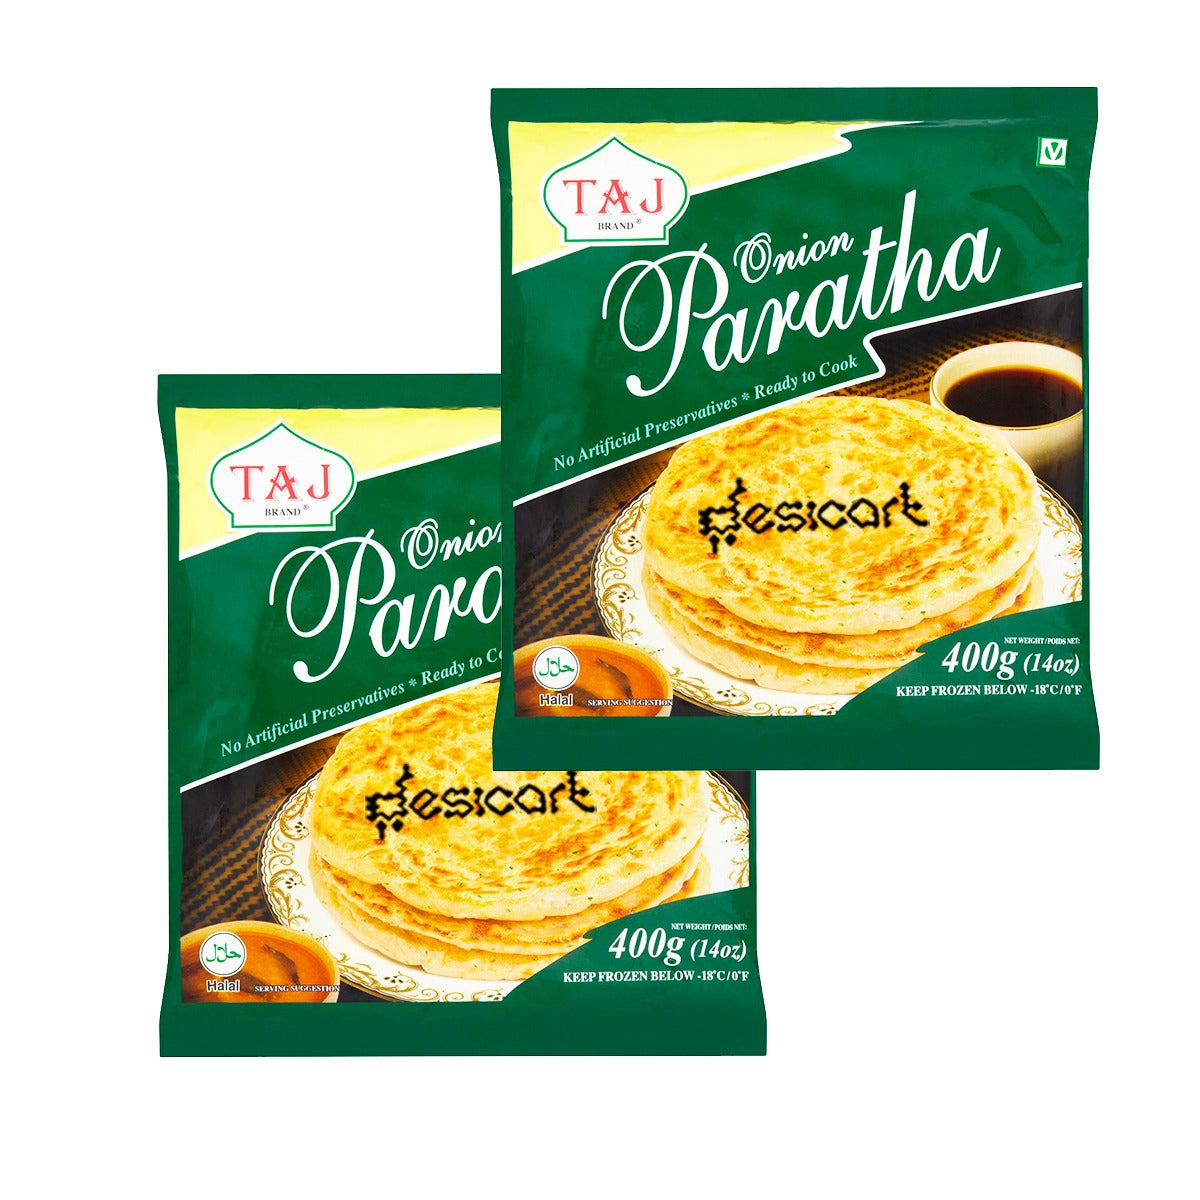 Taj Onion paratha(Pack of 2) 400g